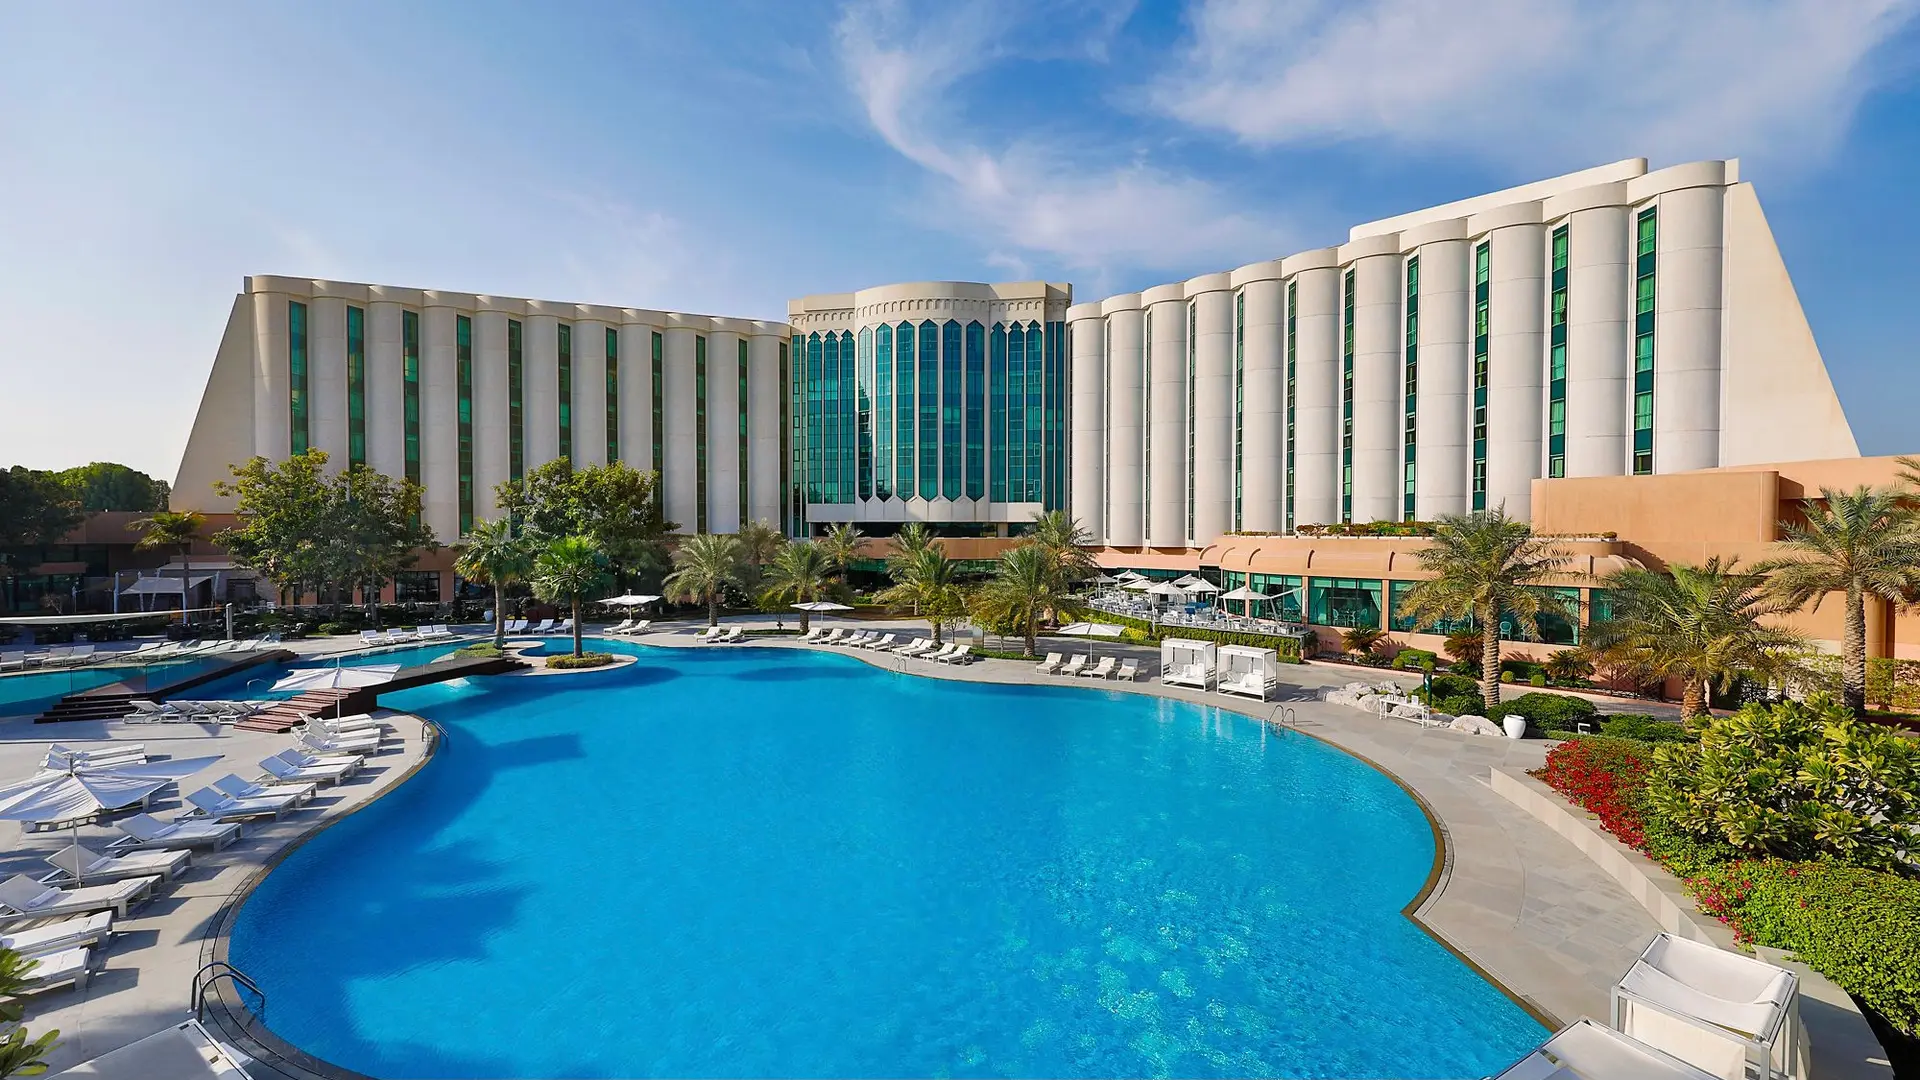 Hotel review Location' - The Ritz-Carlton, Bahrain - 3